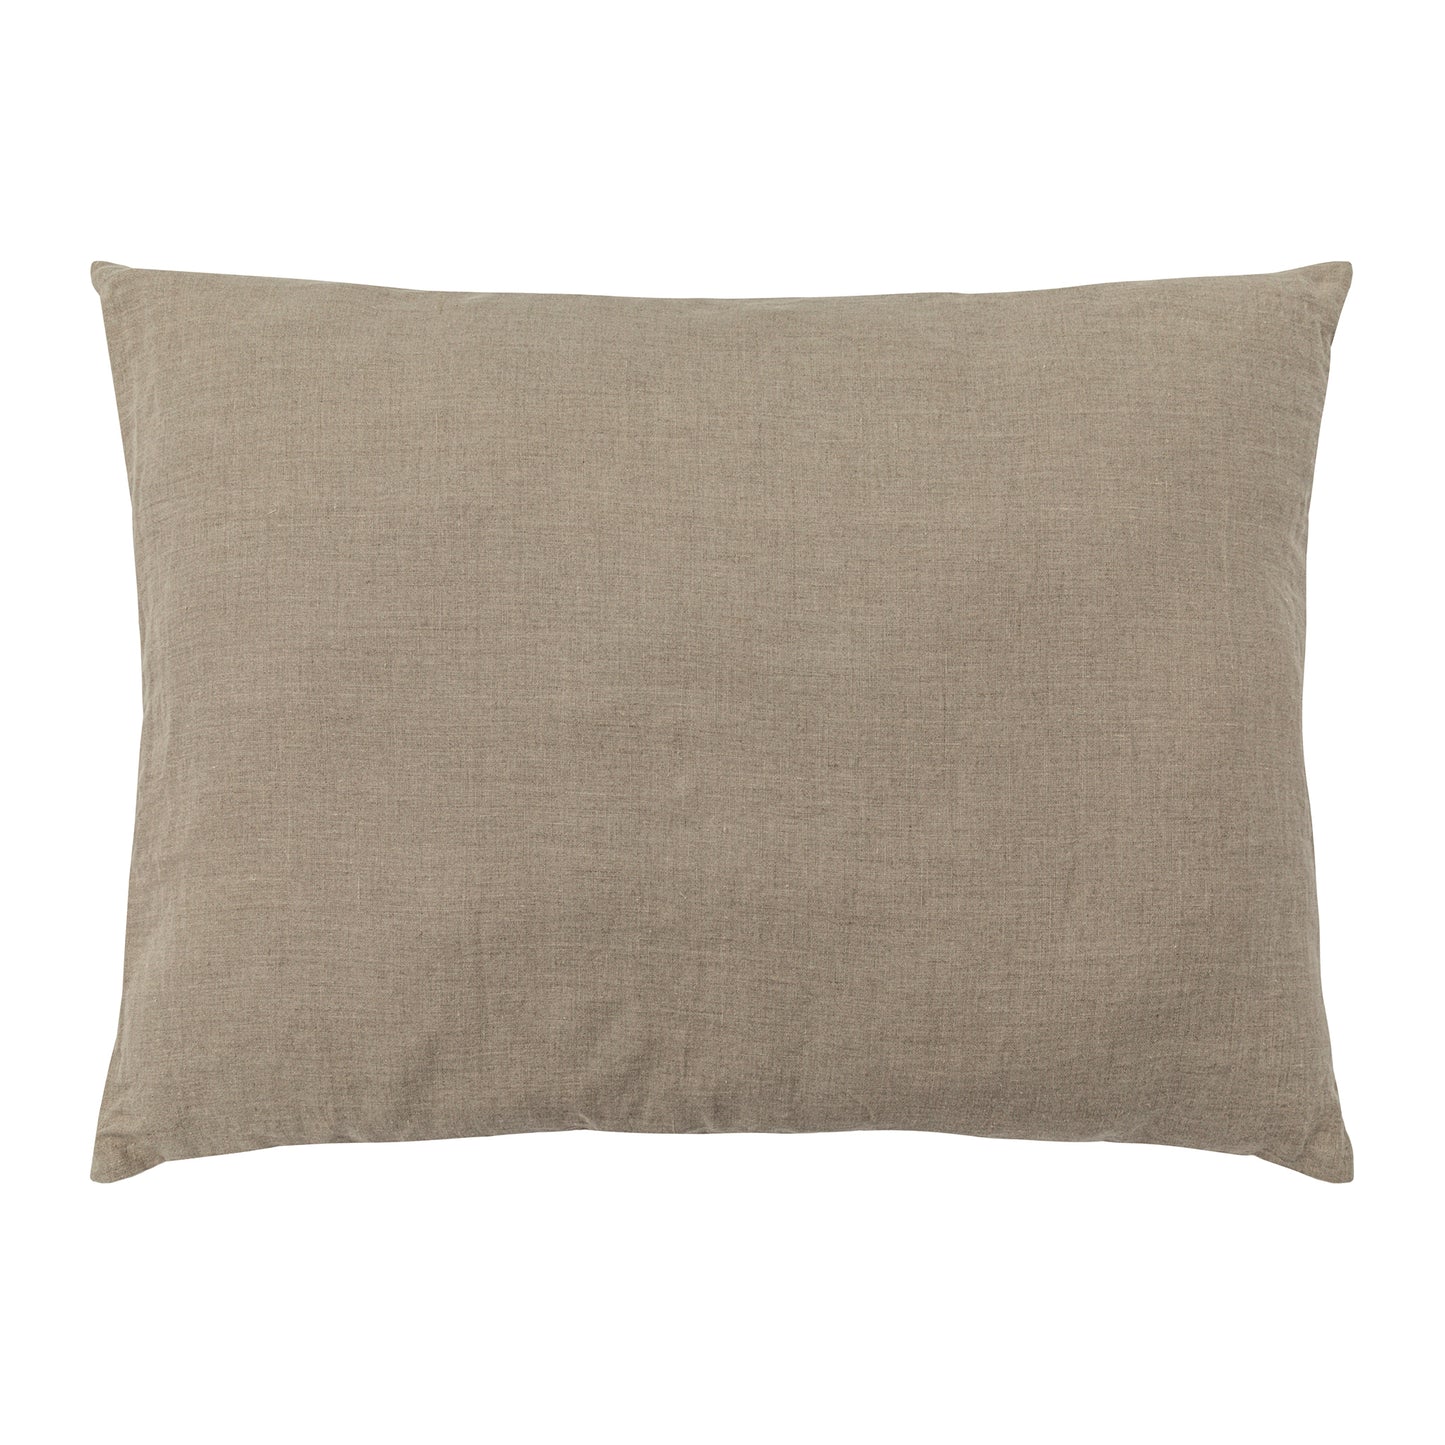 Roots Linen pillowcase, natural-white